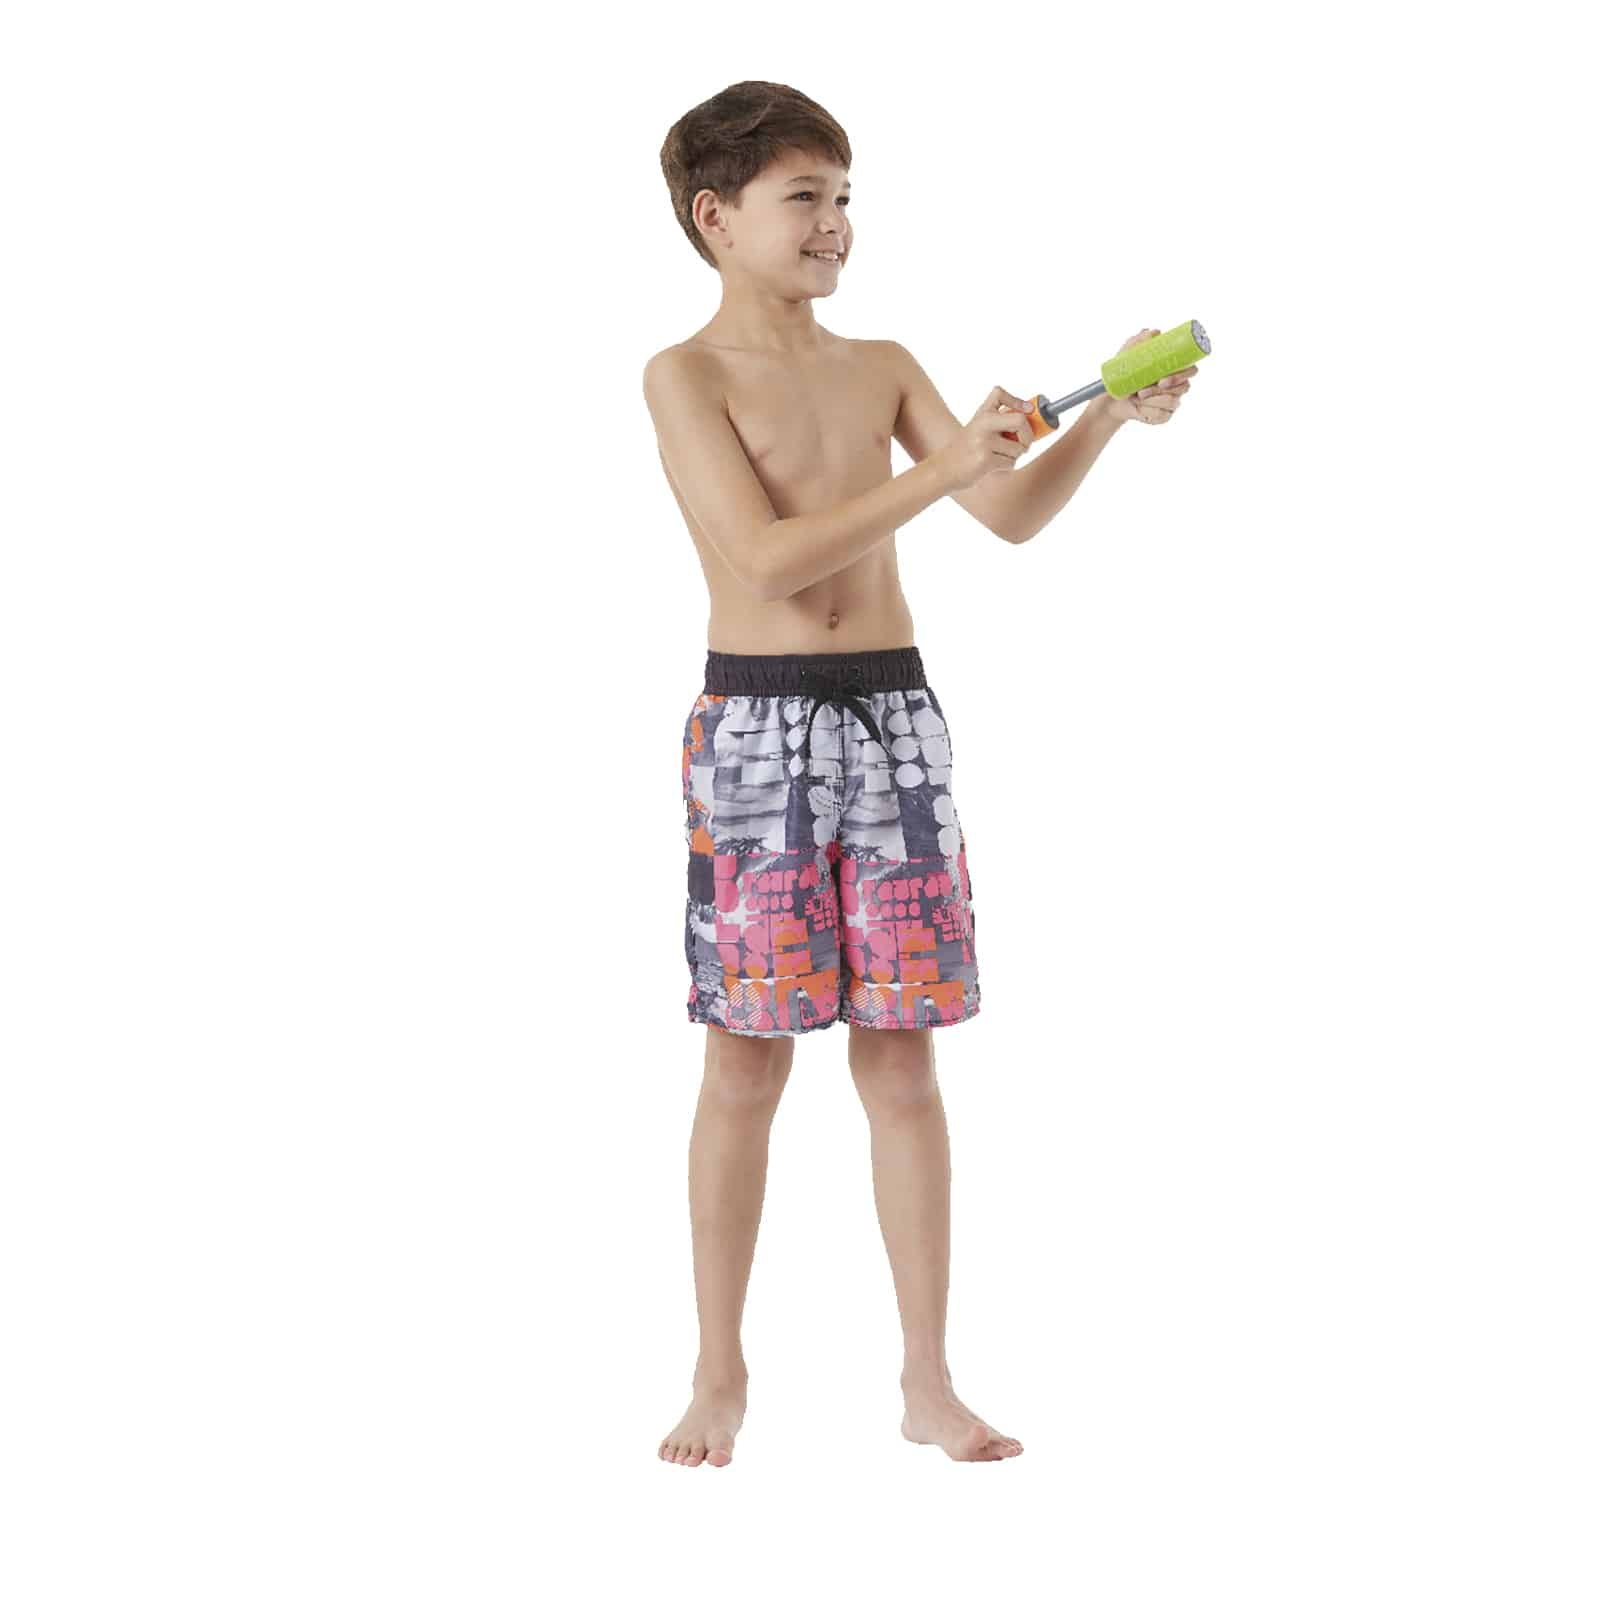 Pistola De Agua Outdoor Toys Waterflash 15x4 Cm